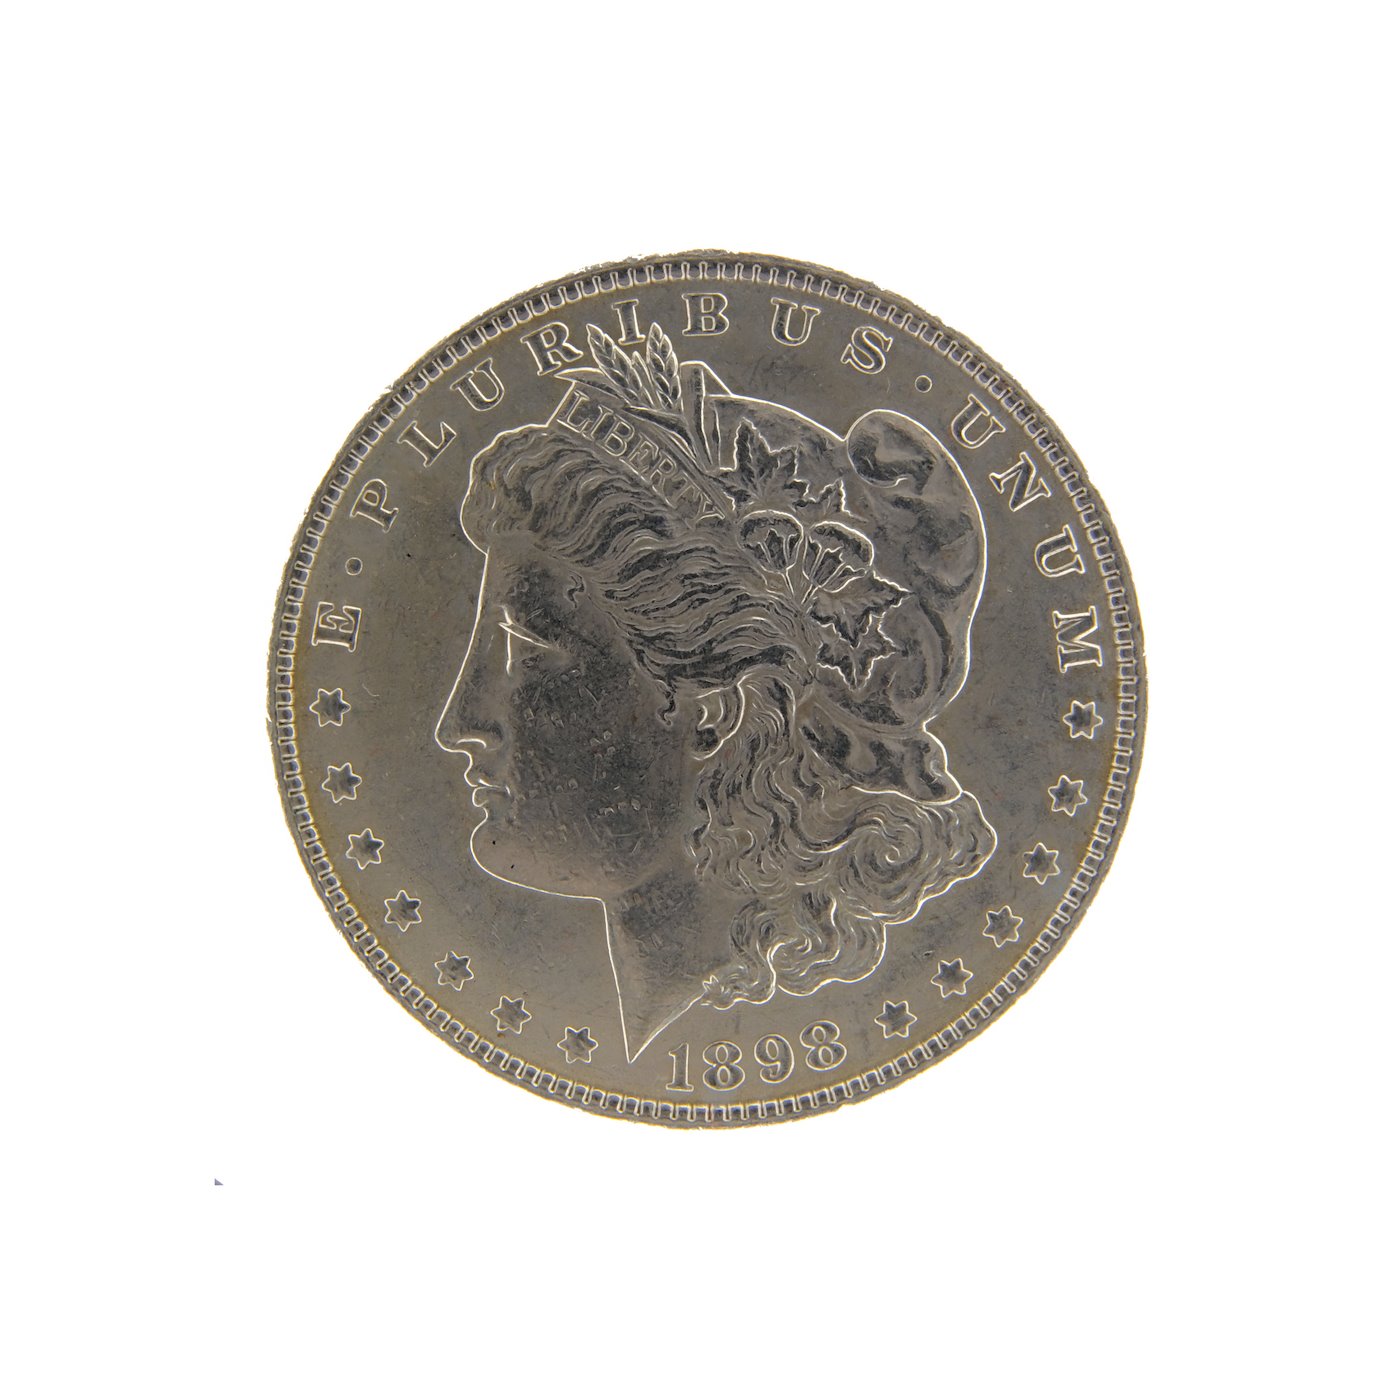 Mince - Stříbrná mince 1 dolar Morgan 1898. Stříbro 900/1000, hrubá hmotnost 26,73 g.